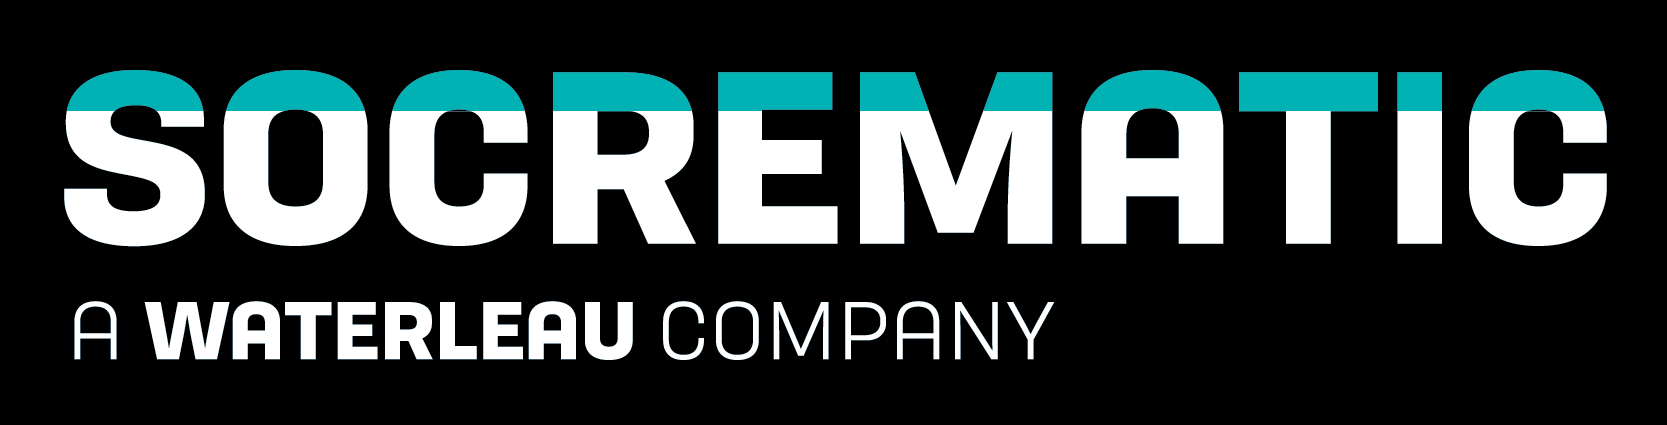 Logo SOCREMATIC (Waterleau Company)